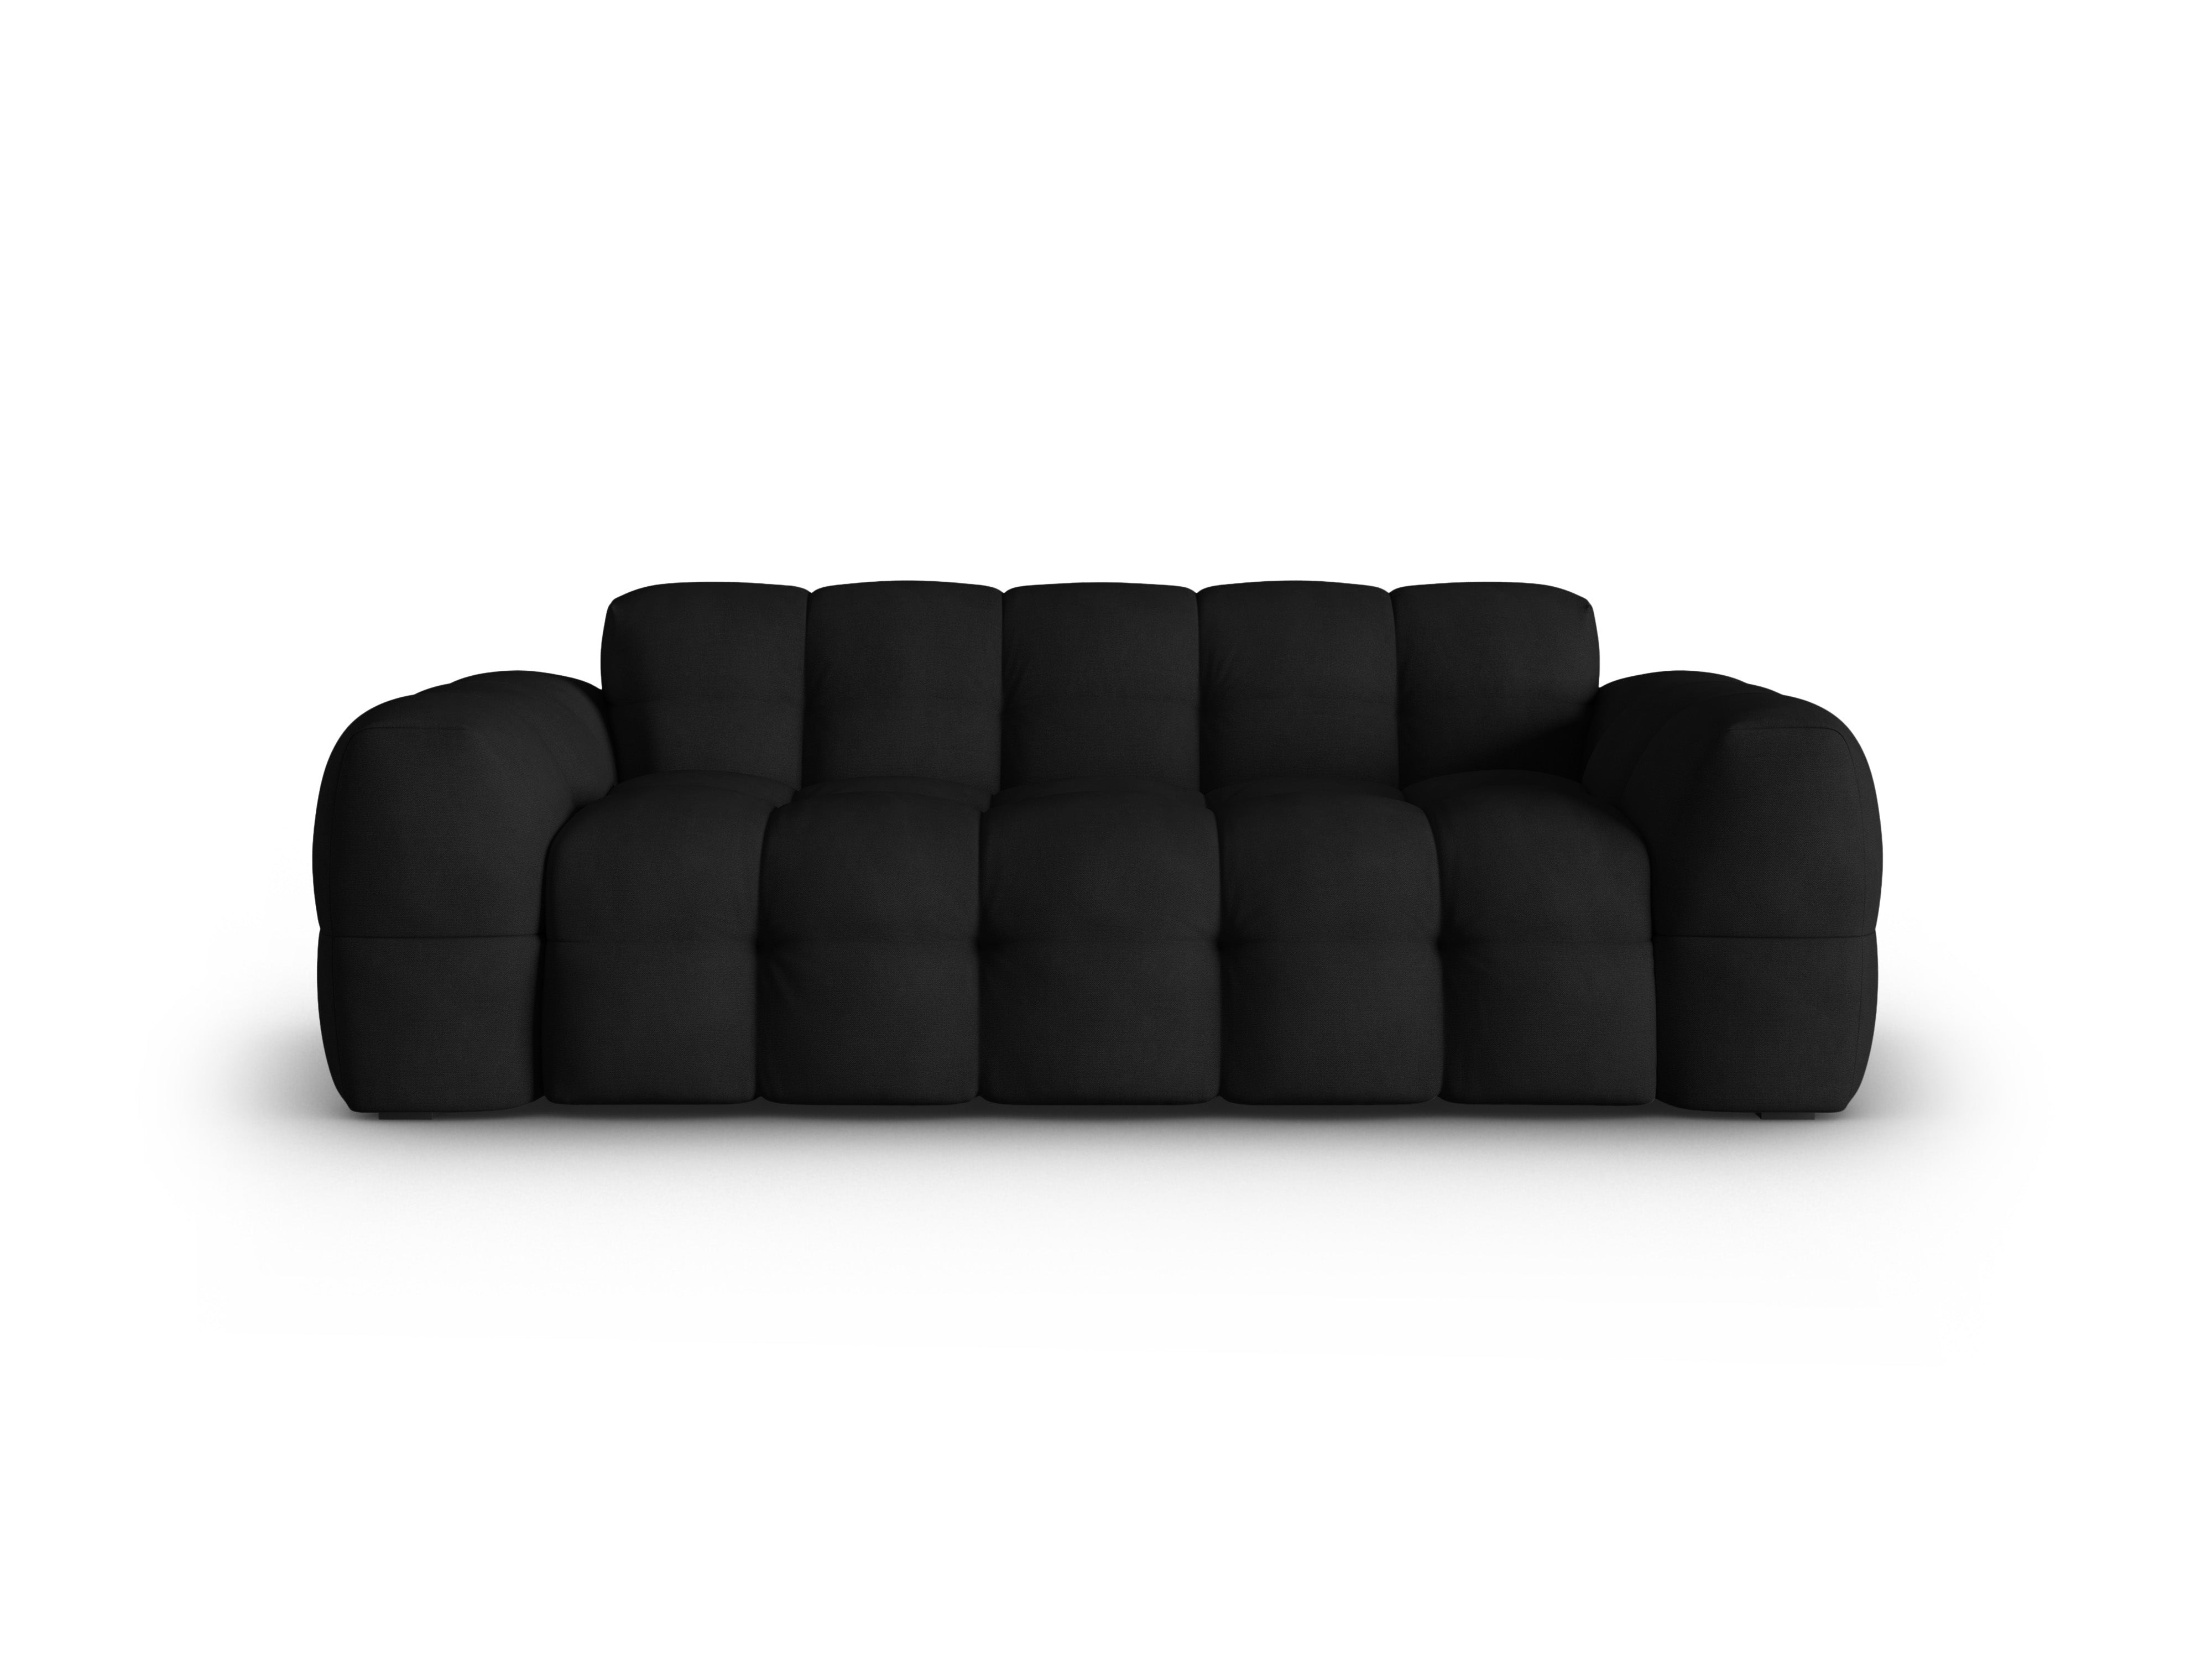 Sofa, "Nino", 2 Seats, 208x105x68
Made in Europe, Maison Heritage, Eye on Design